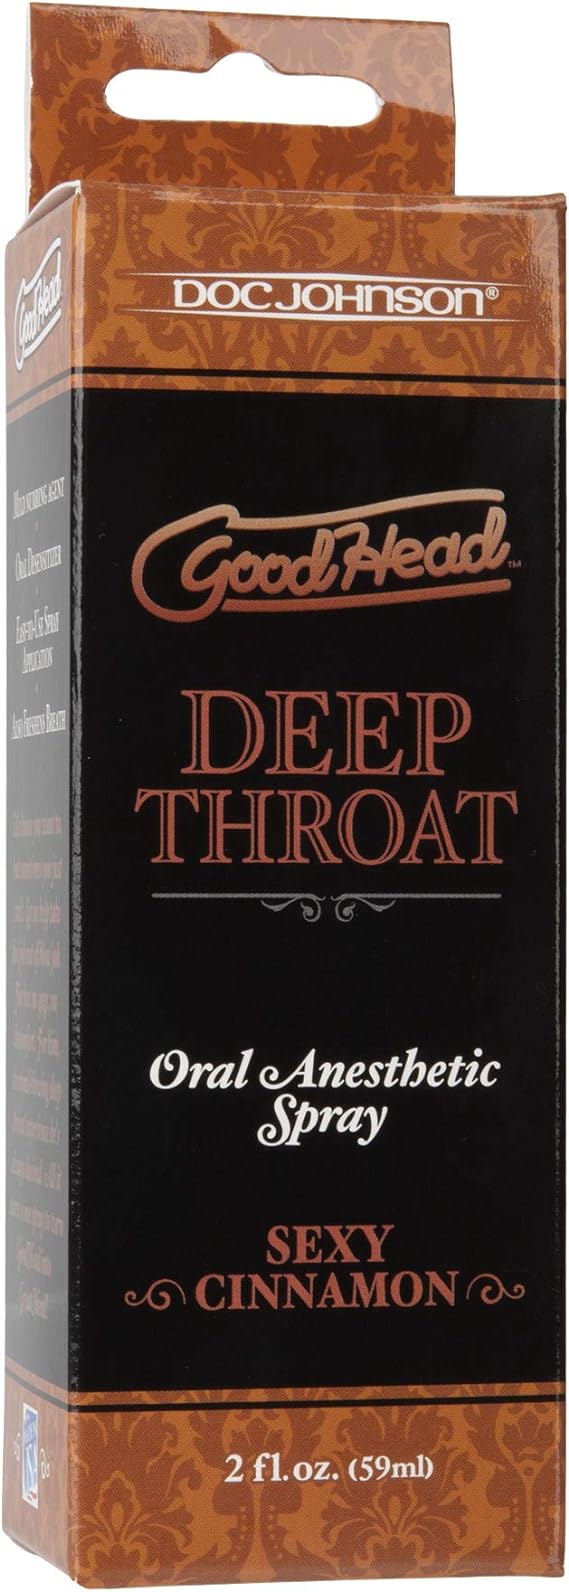 Doc Johnson Deep Throat Oral Anesthetic Spray - Cinnamon